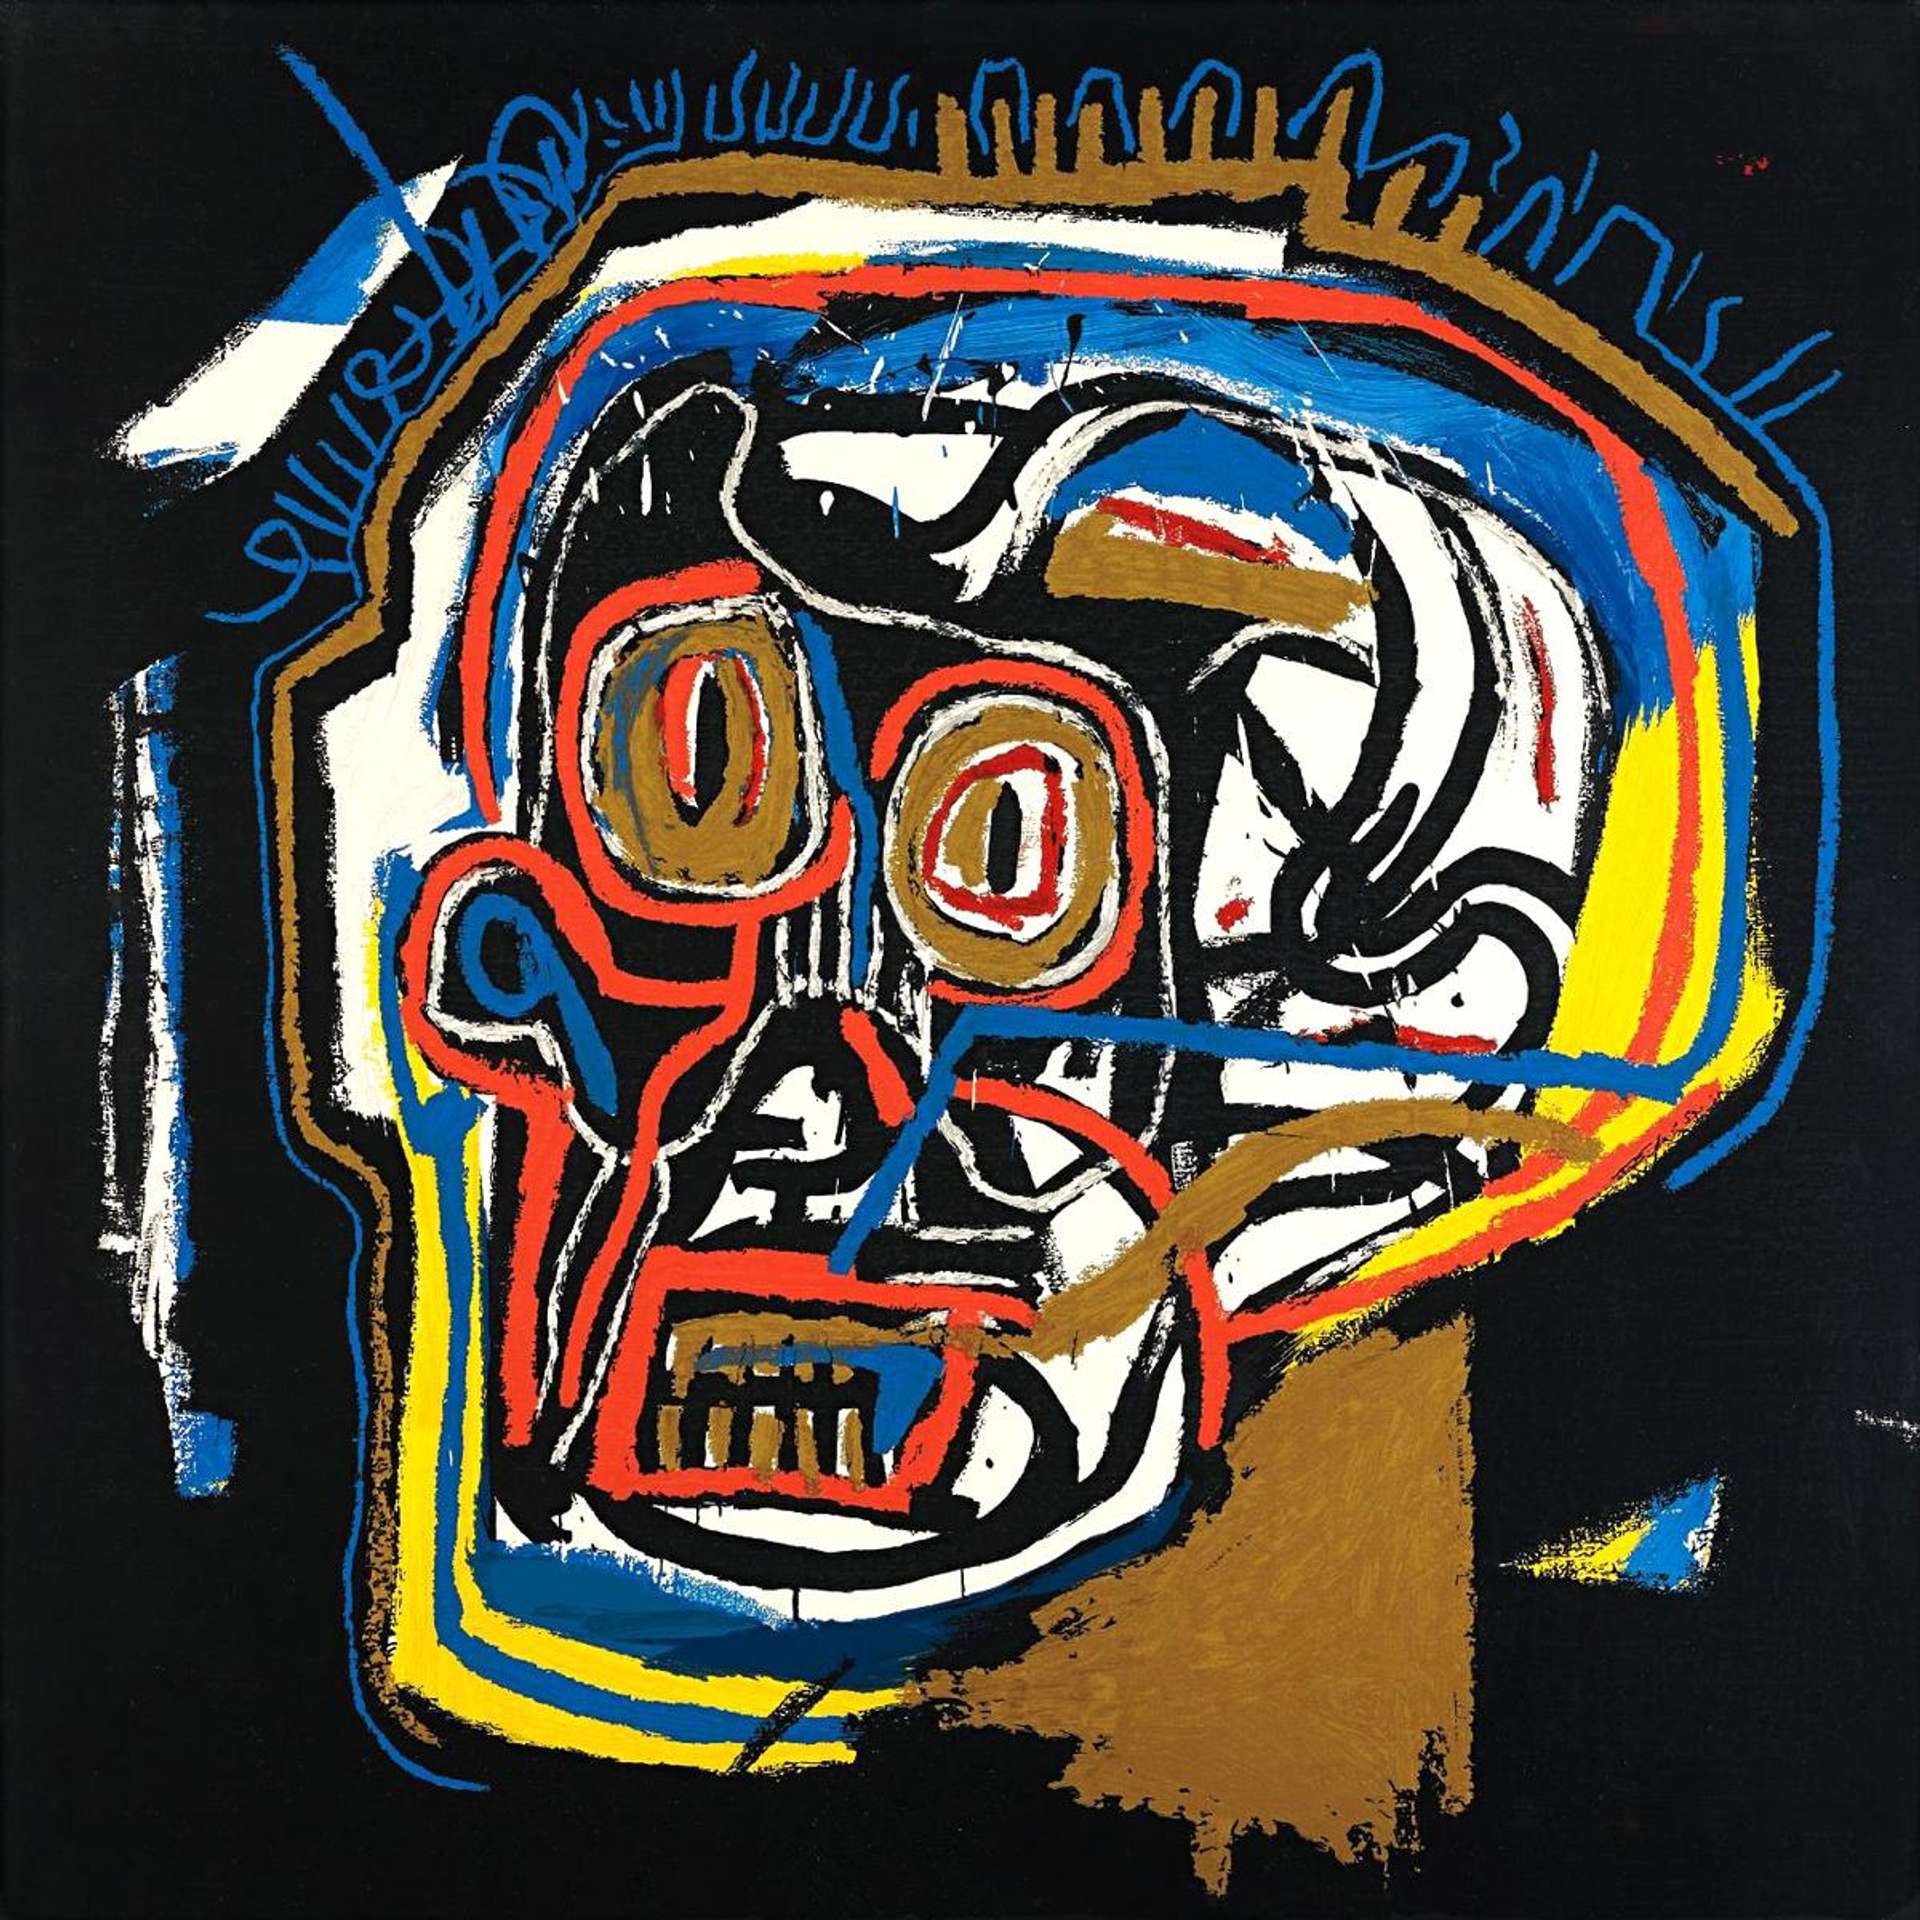 Jean-Michel Basquiat’s Head. A Neo-Expressionist screenprint of a large, figurative skull against a black background. 